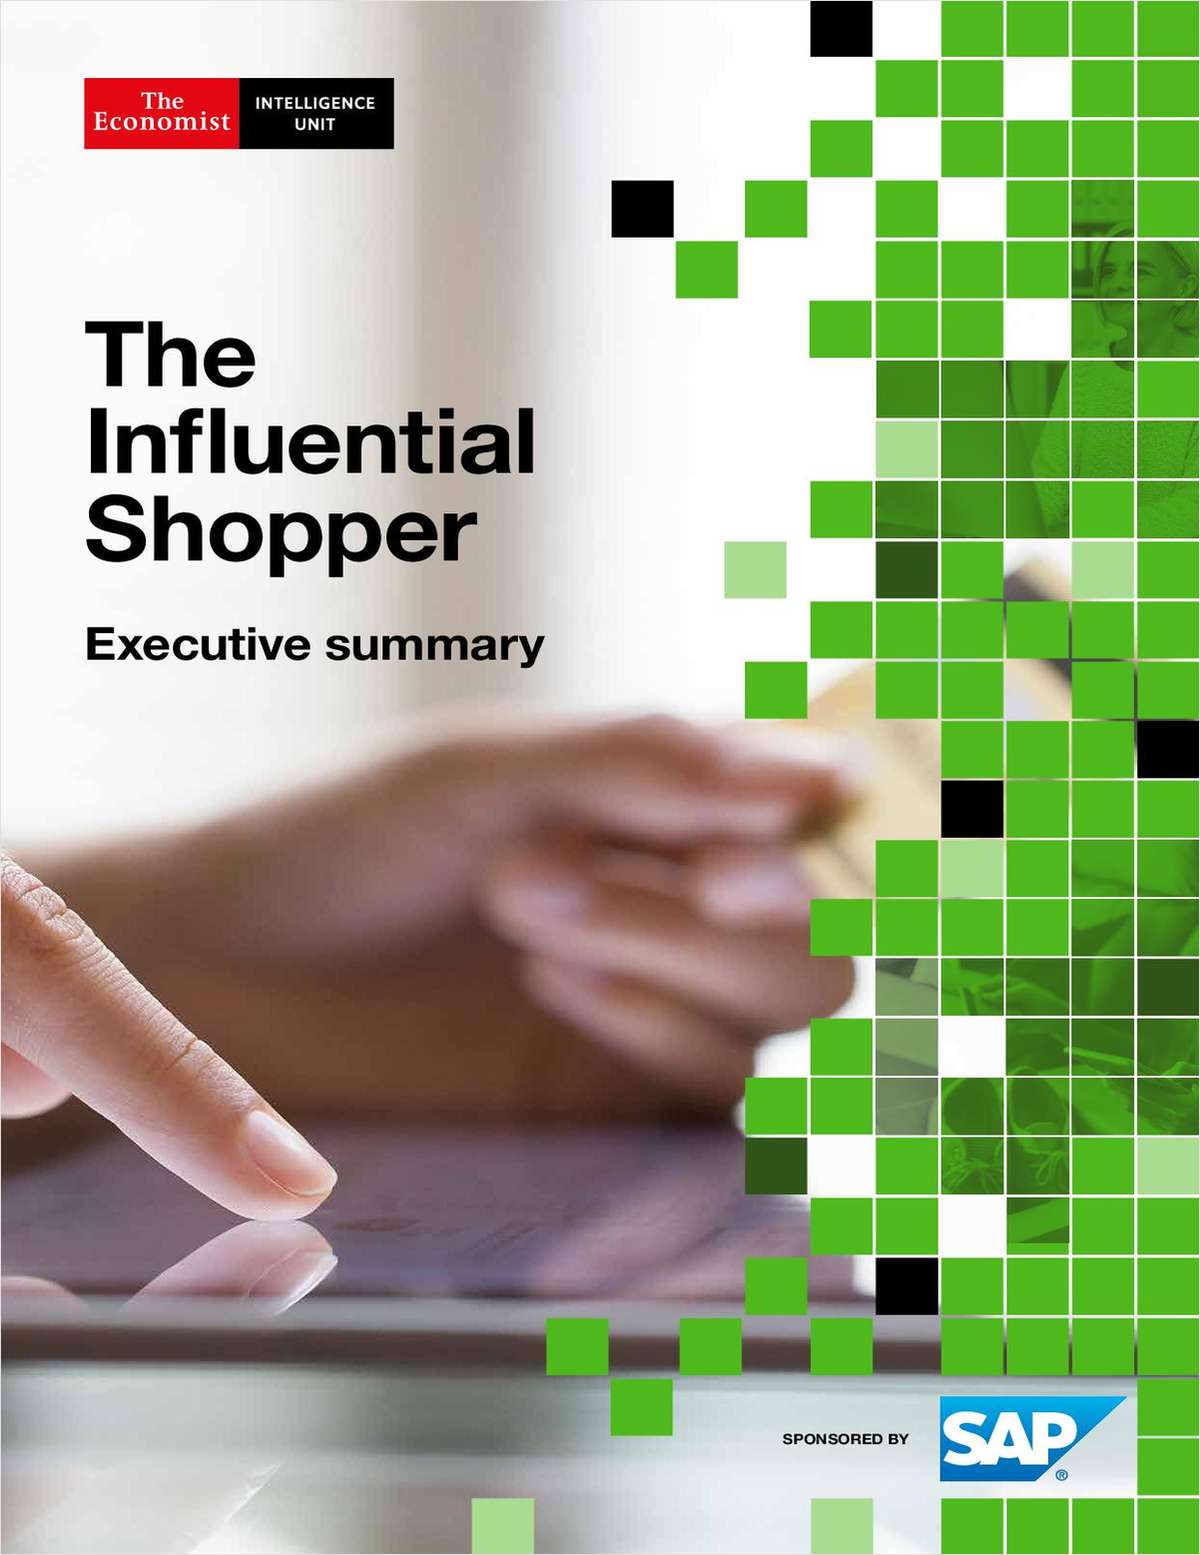 The Economist Intelligence Unit -The Influential Shopper Executive Summary